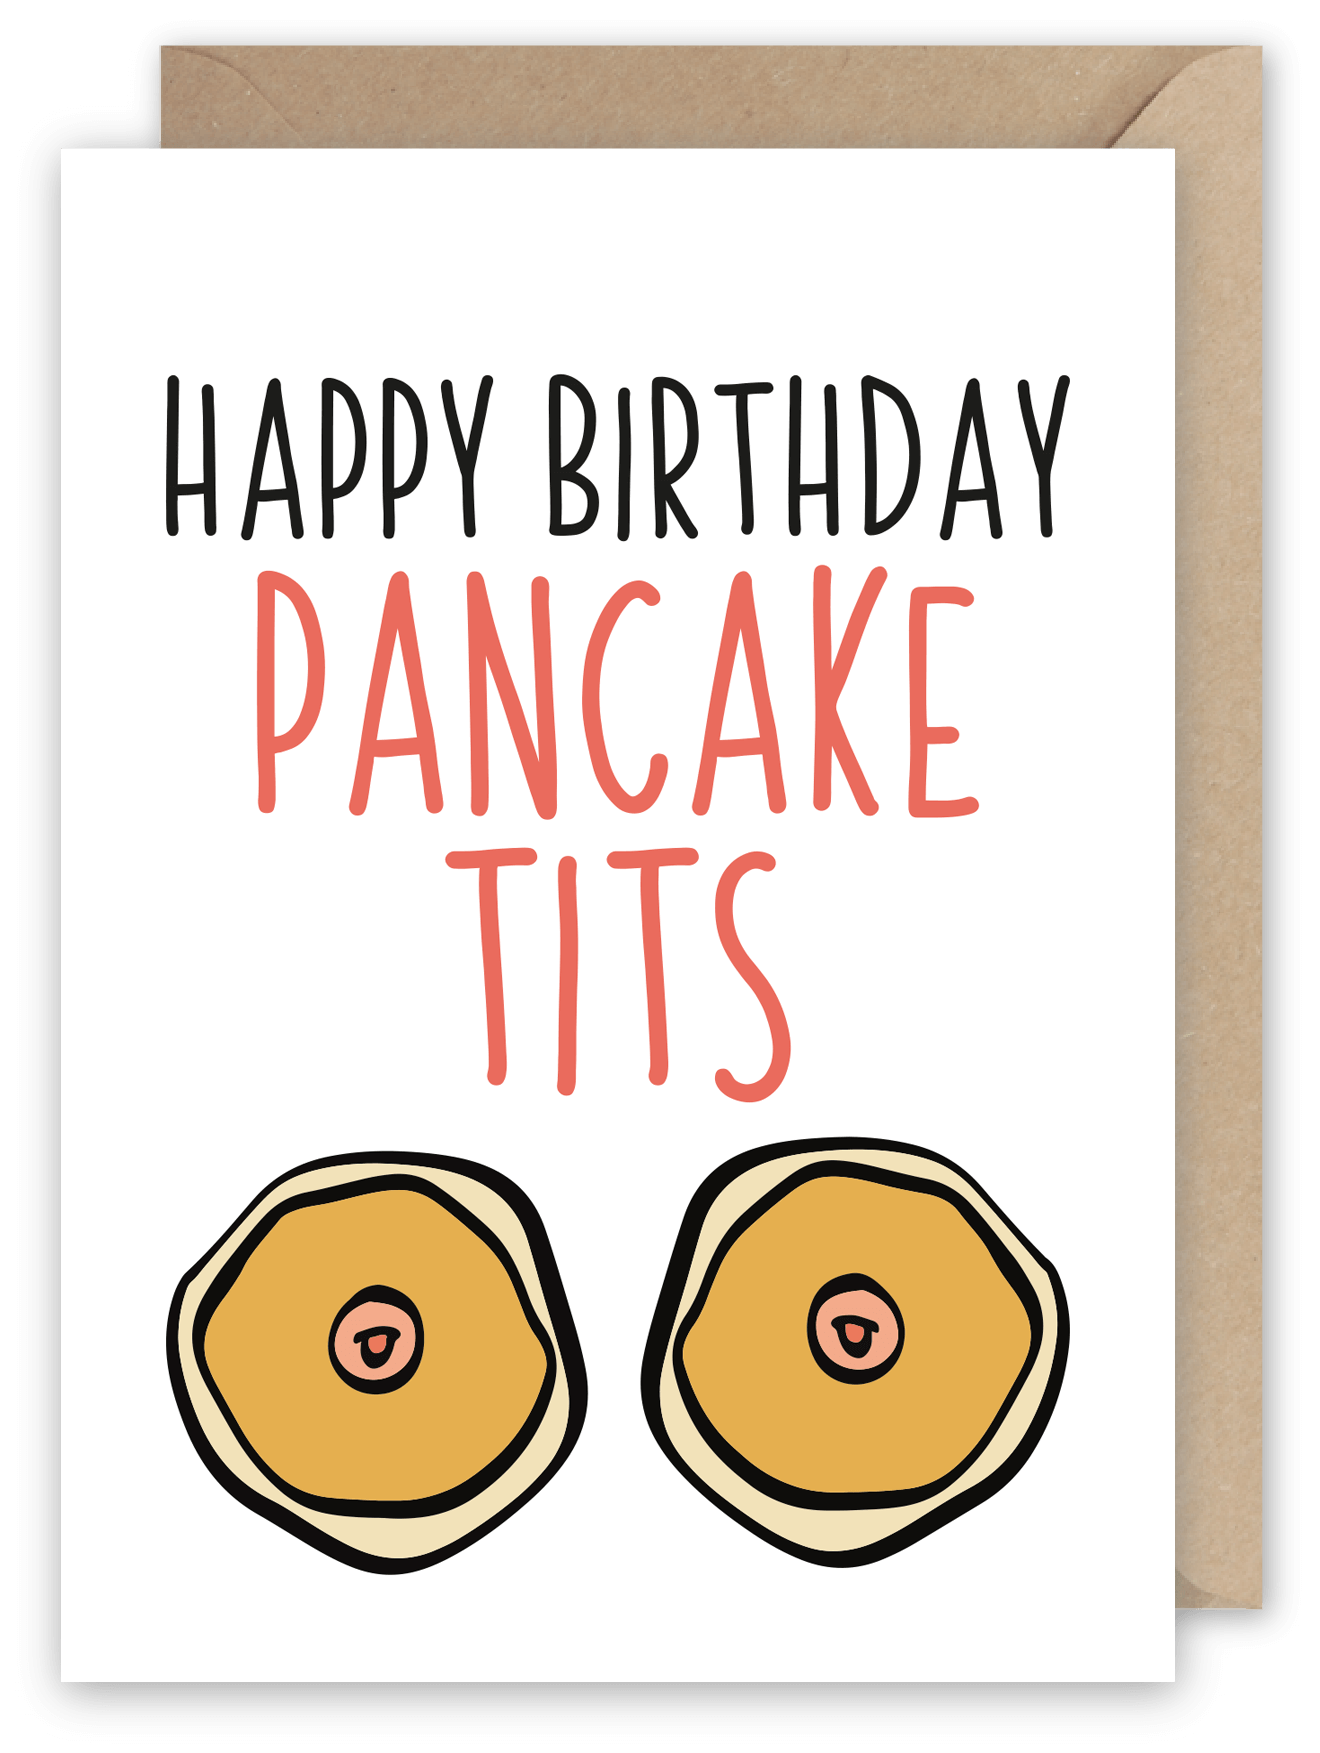 Tits birthday Party Videos